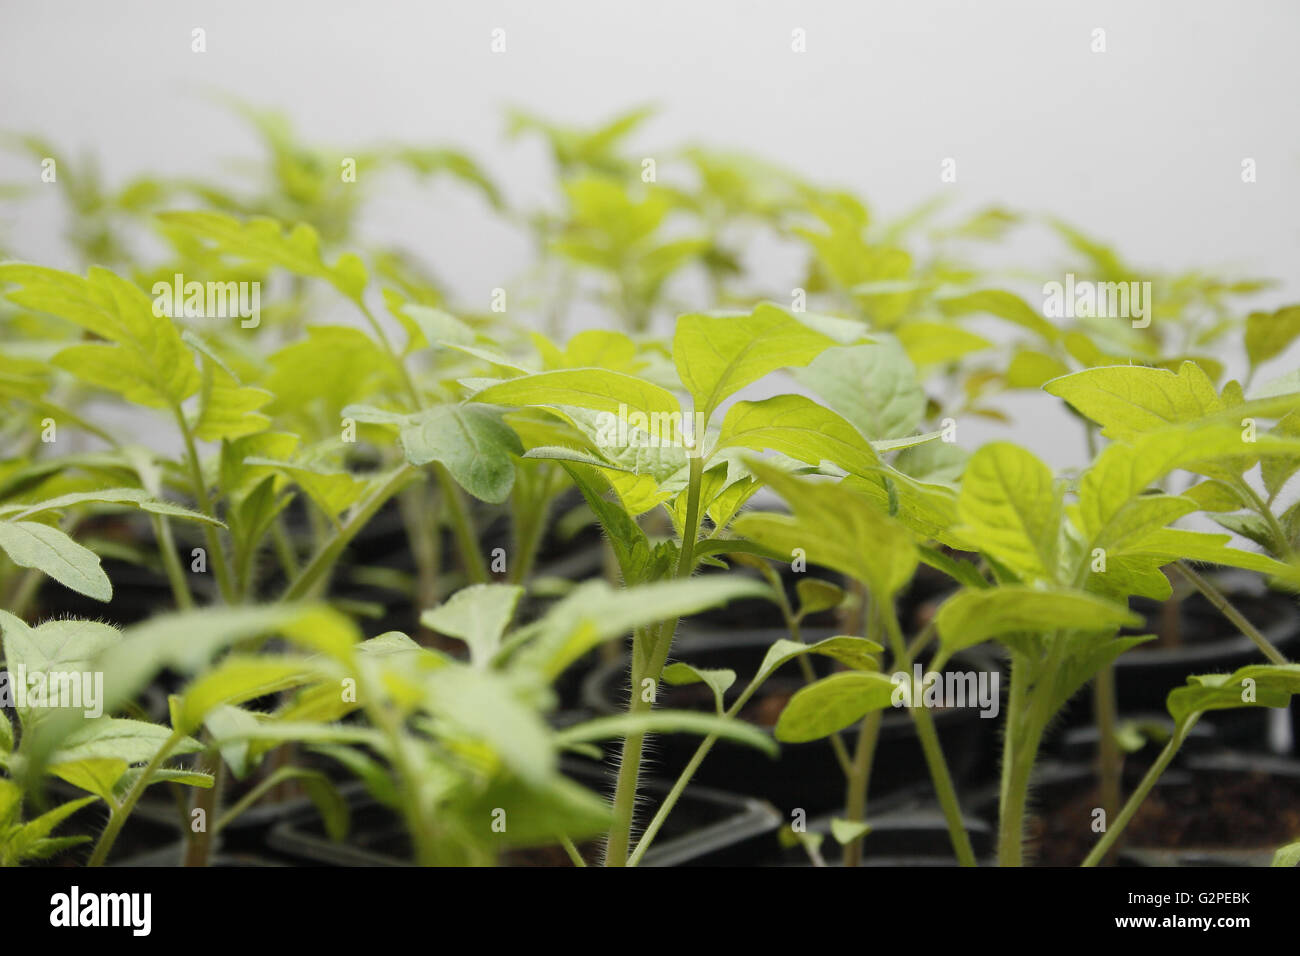 image of tomato seedlings in pots Solanum lycopersicum Stock Photo